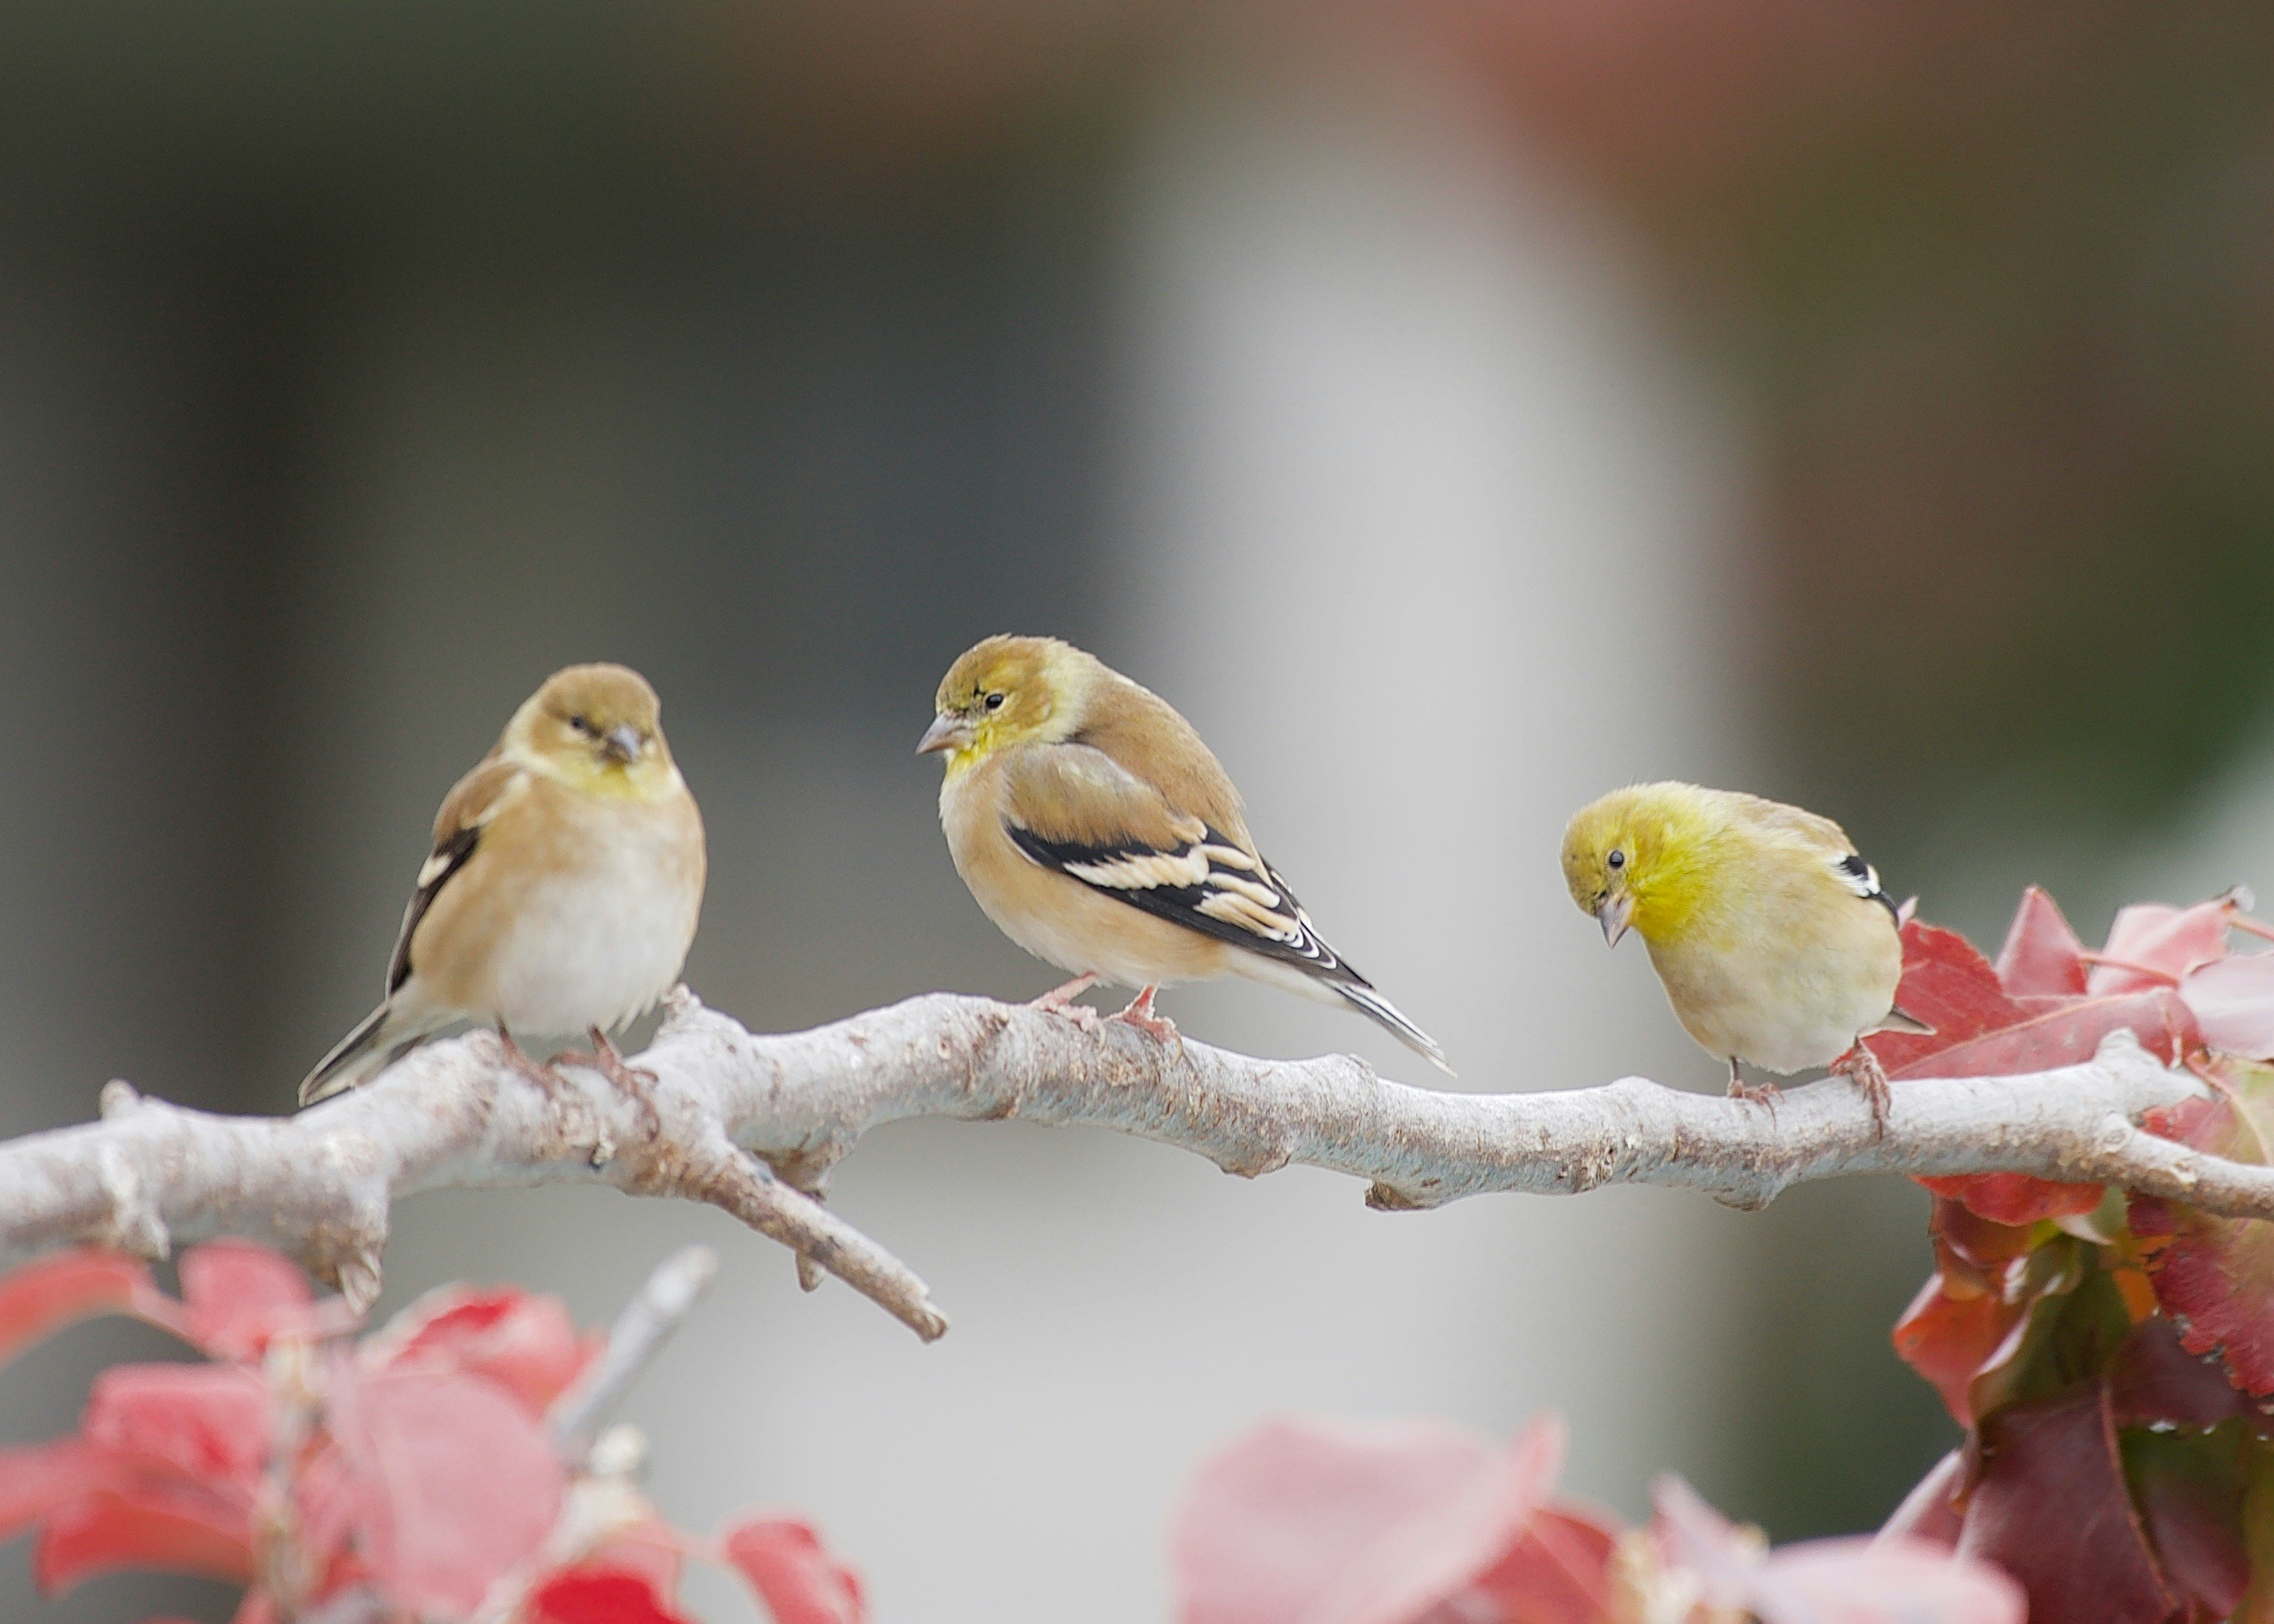 Trio of birds sat on a branch